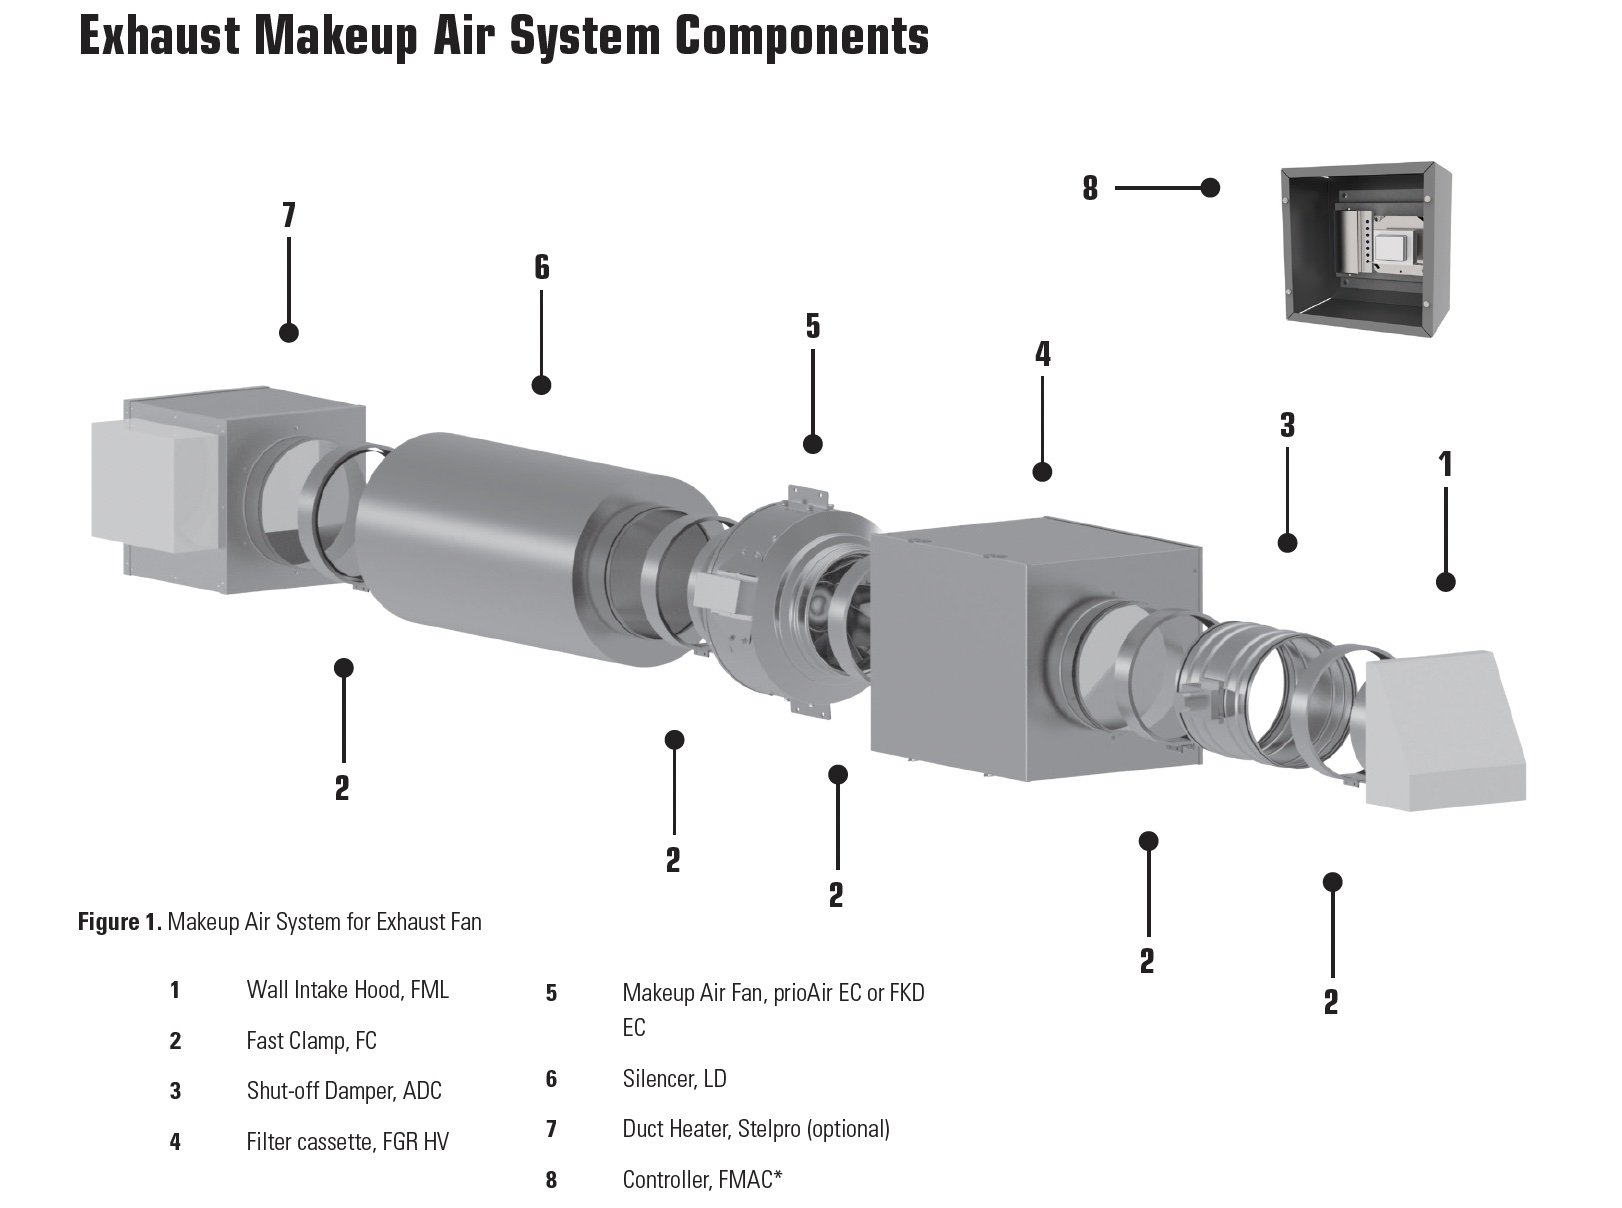 Fantech range hood makeup air system components